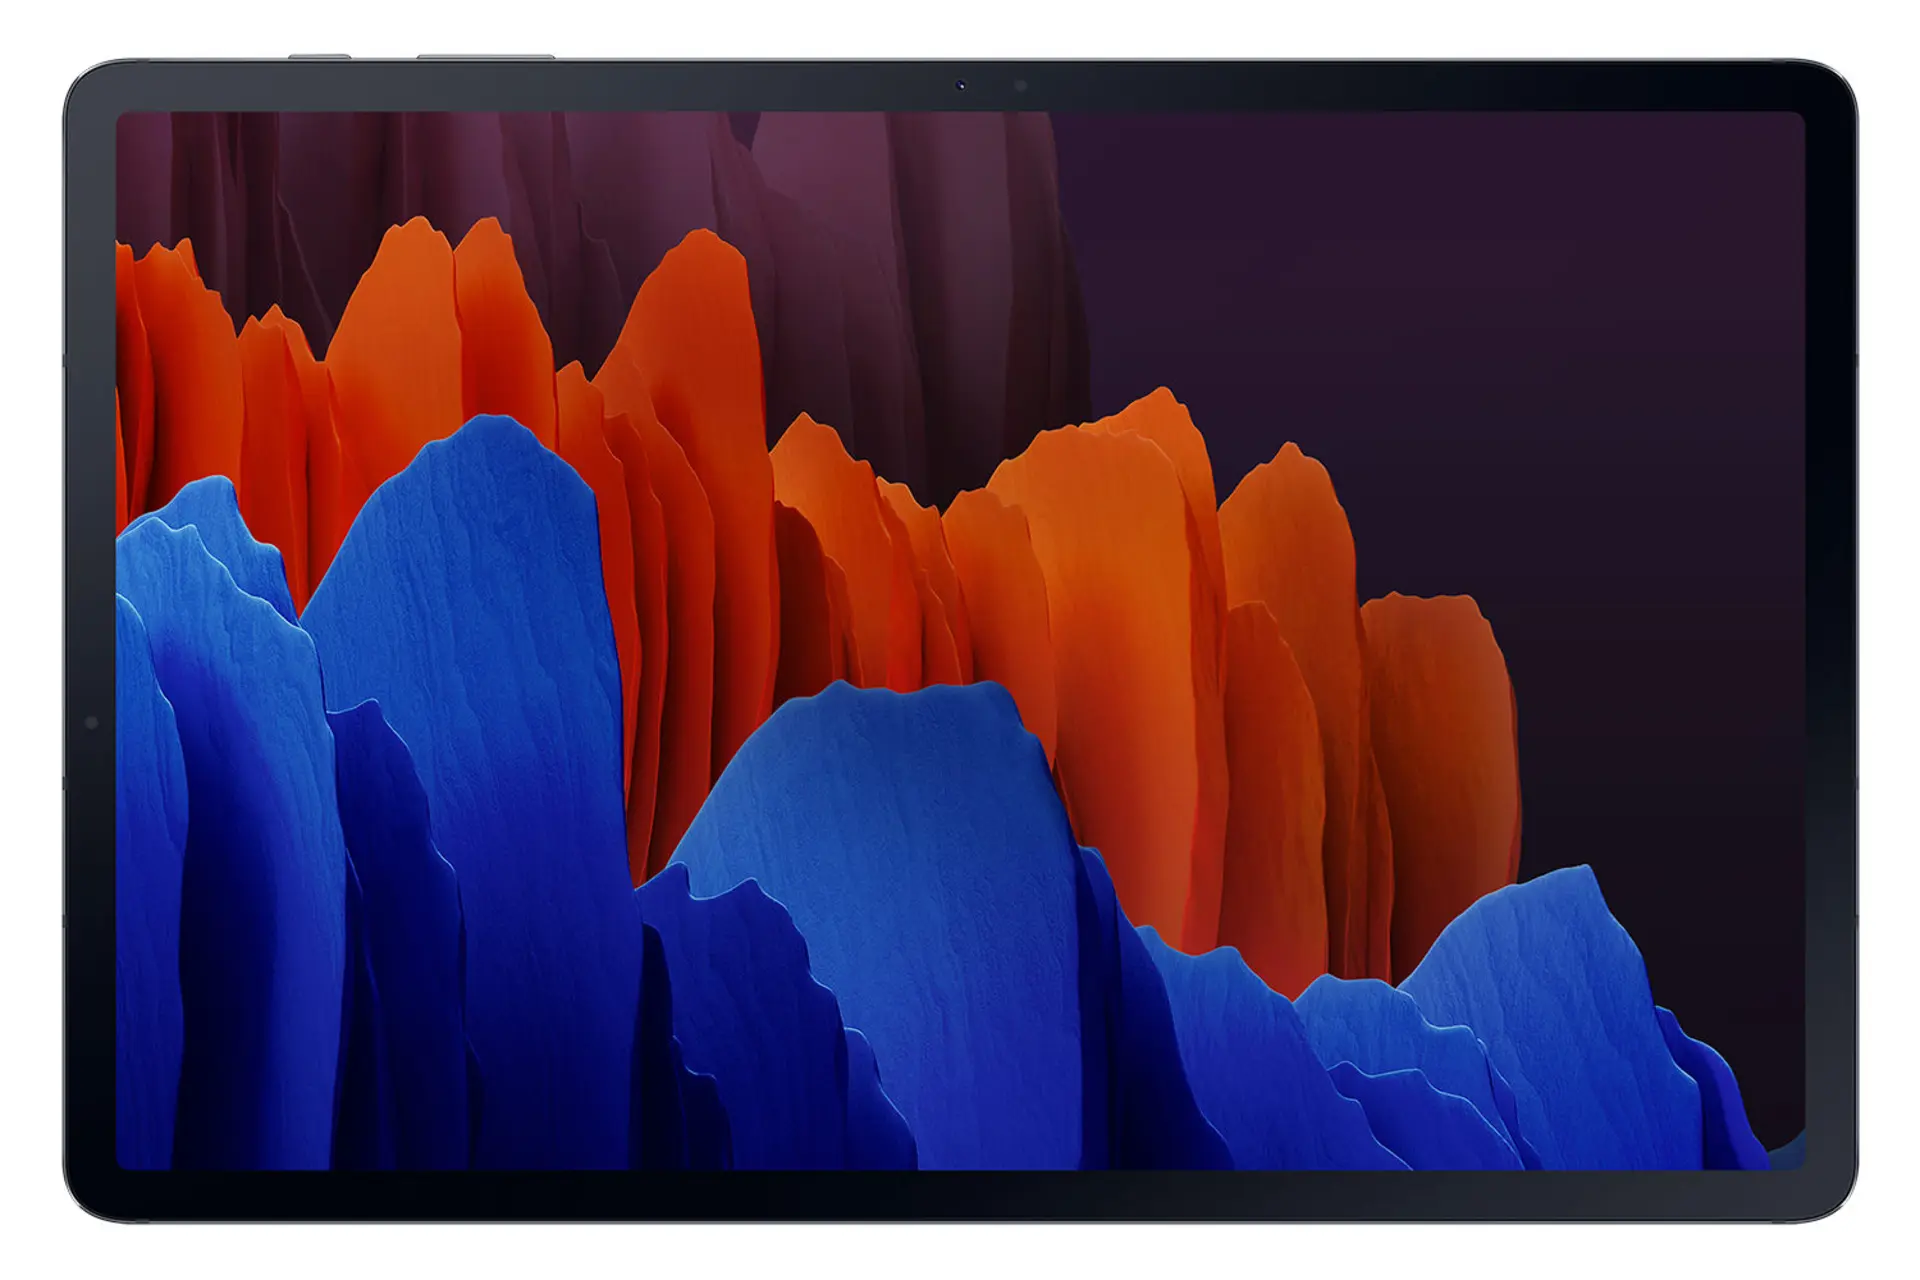 نمای جلوی تبلت اندرویدی گلکسی تب اس ۷ سامسونگ / Samsung Galaxy Tab S7